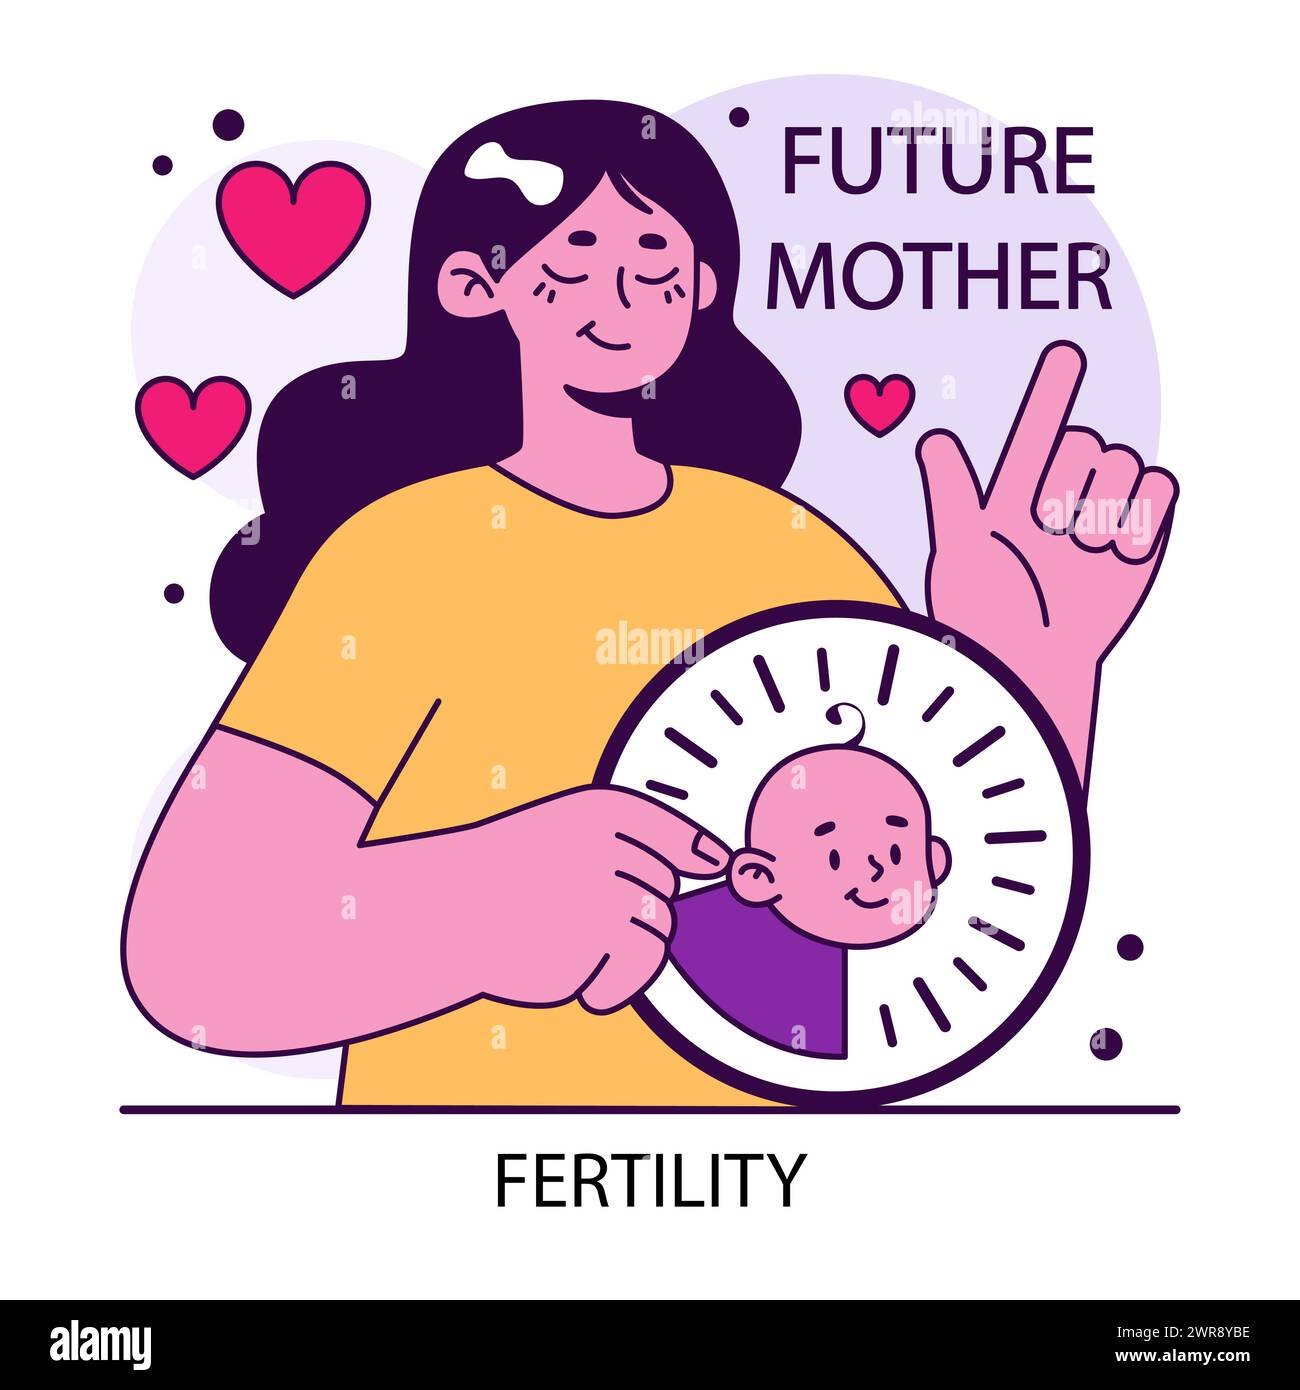 Fertilität. Hoffnungsvolle Frau wird Mutter. Positive Schwangerschaftserwartung. Reproduktive Gesundheit, Mutterschaft und Familienplanung. Illustration des flachen Vektors. Stock Vektor